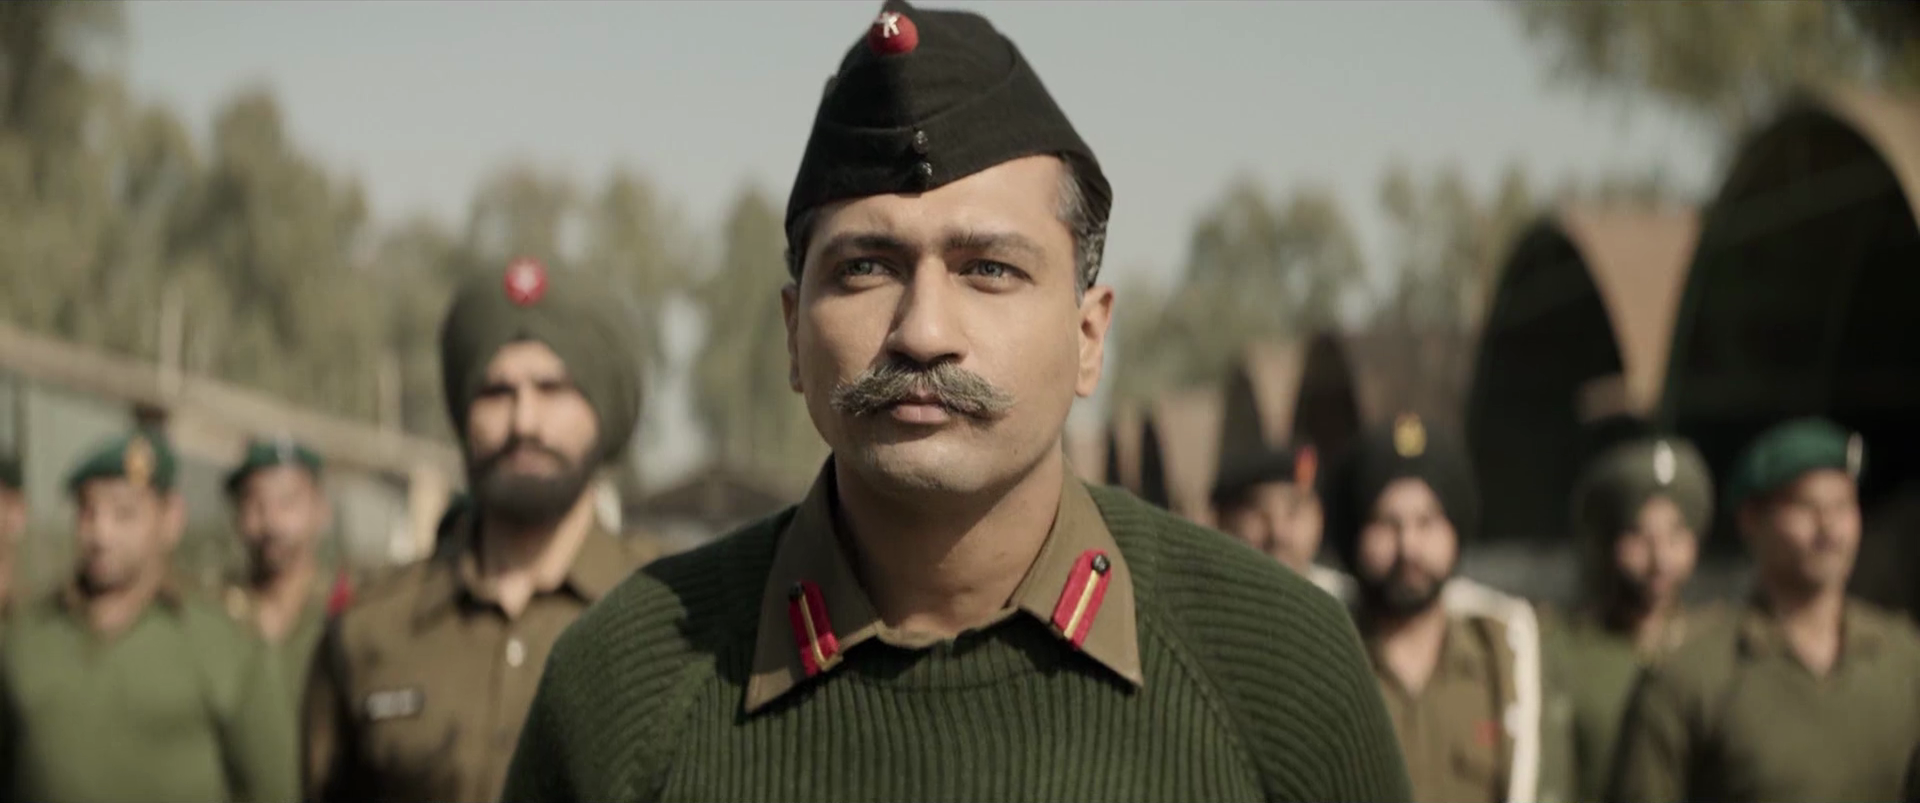 Sam Bahadur 2023 Hindi Movie Download HDRip || 300Mb || 720p || 1080p